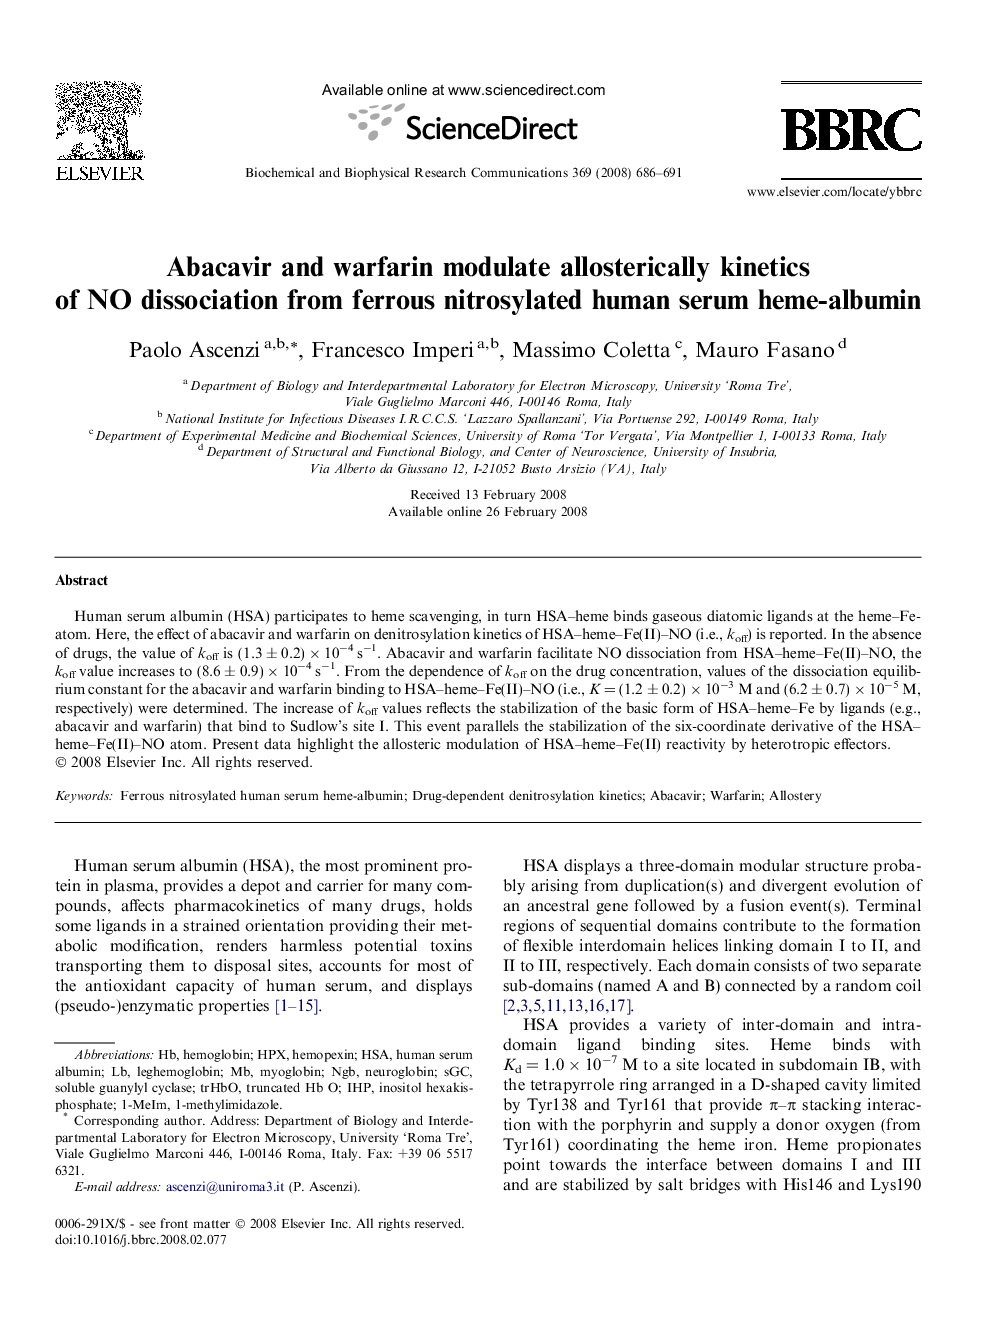 Abacavir and warfarin modulate allosterically kinetics of NO dissociation from ferrous nitrosylated human serum heme-albumin